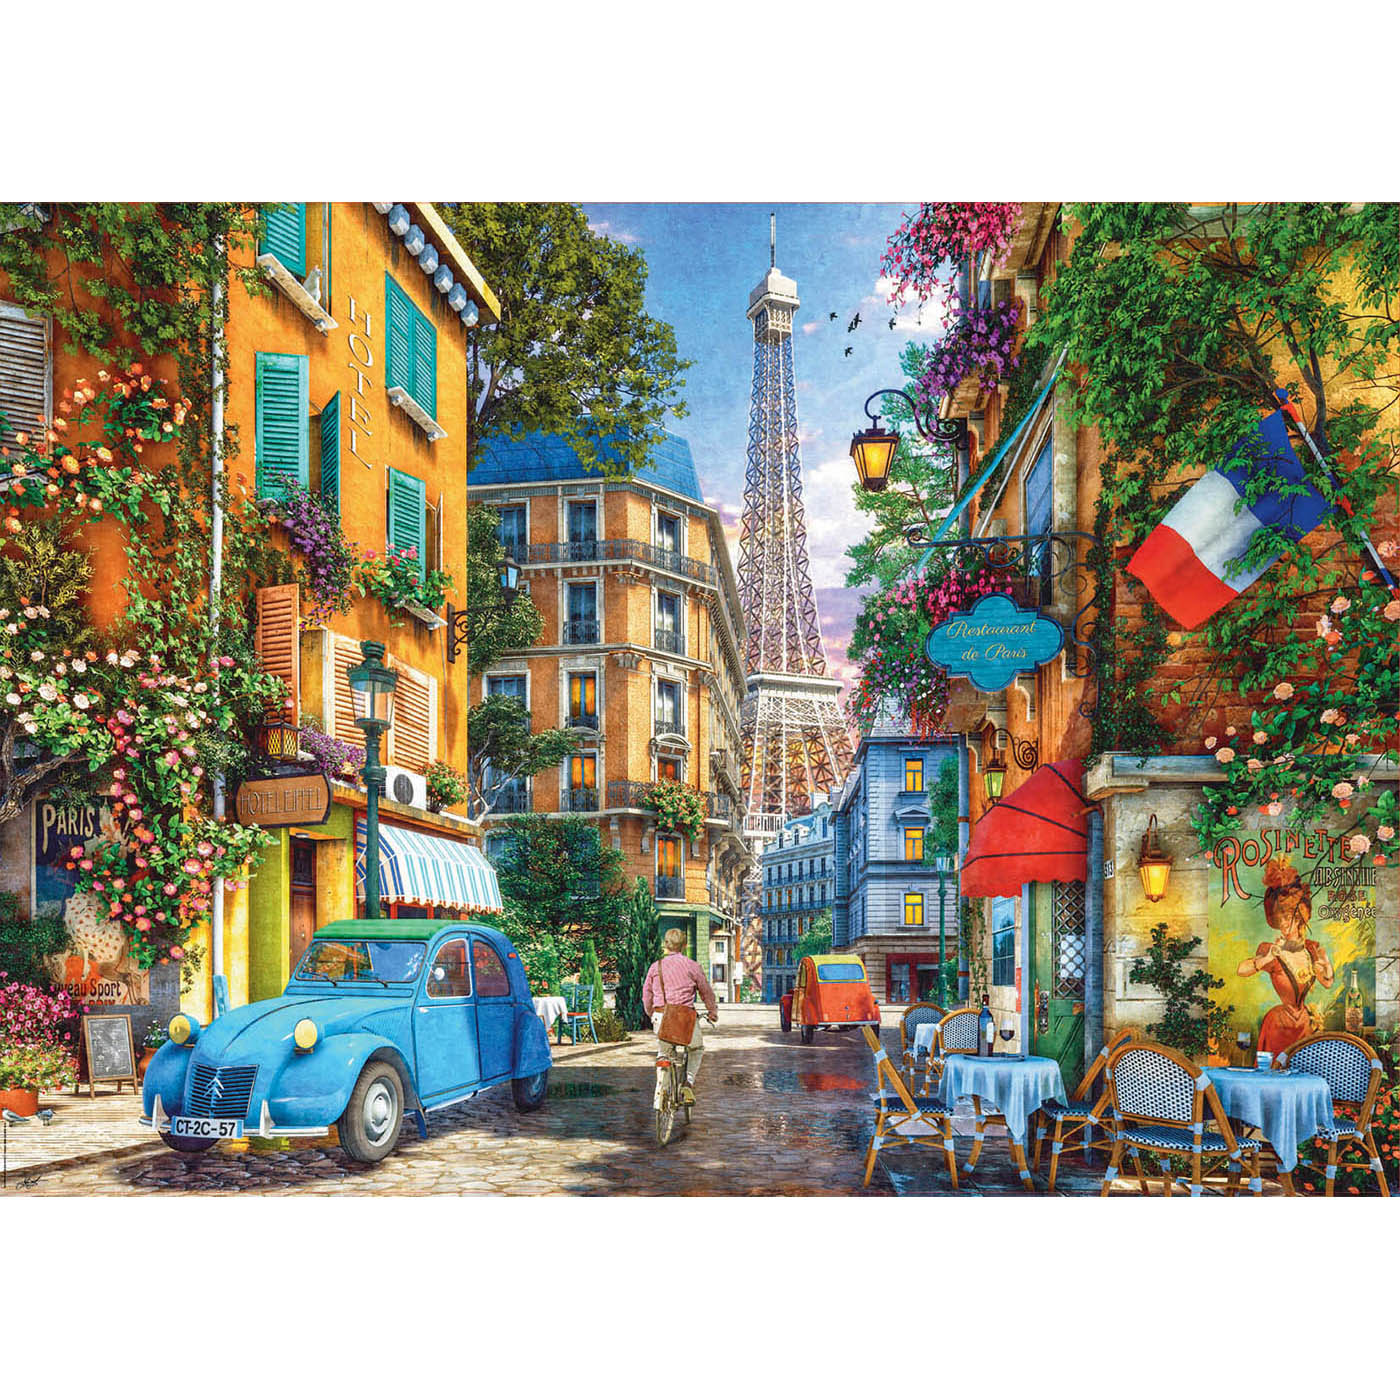 the old streets of paris educa puzzle image